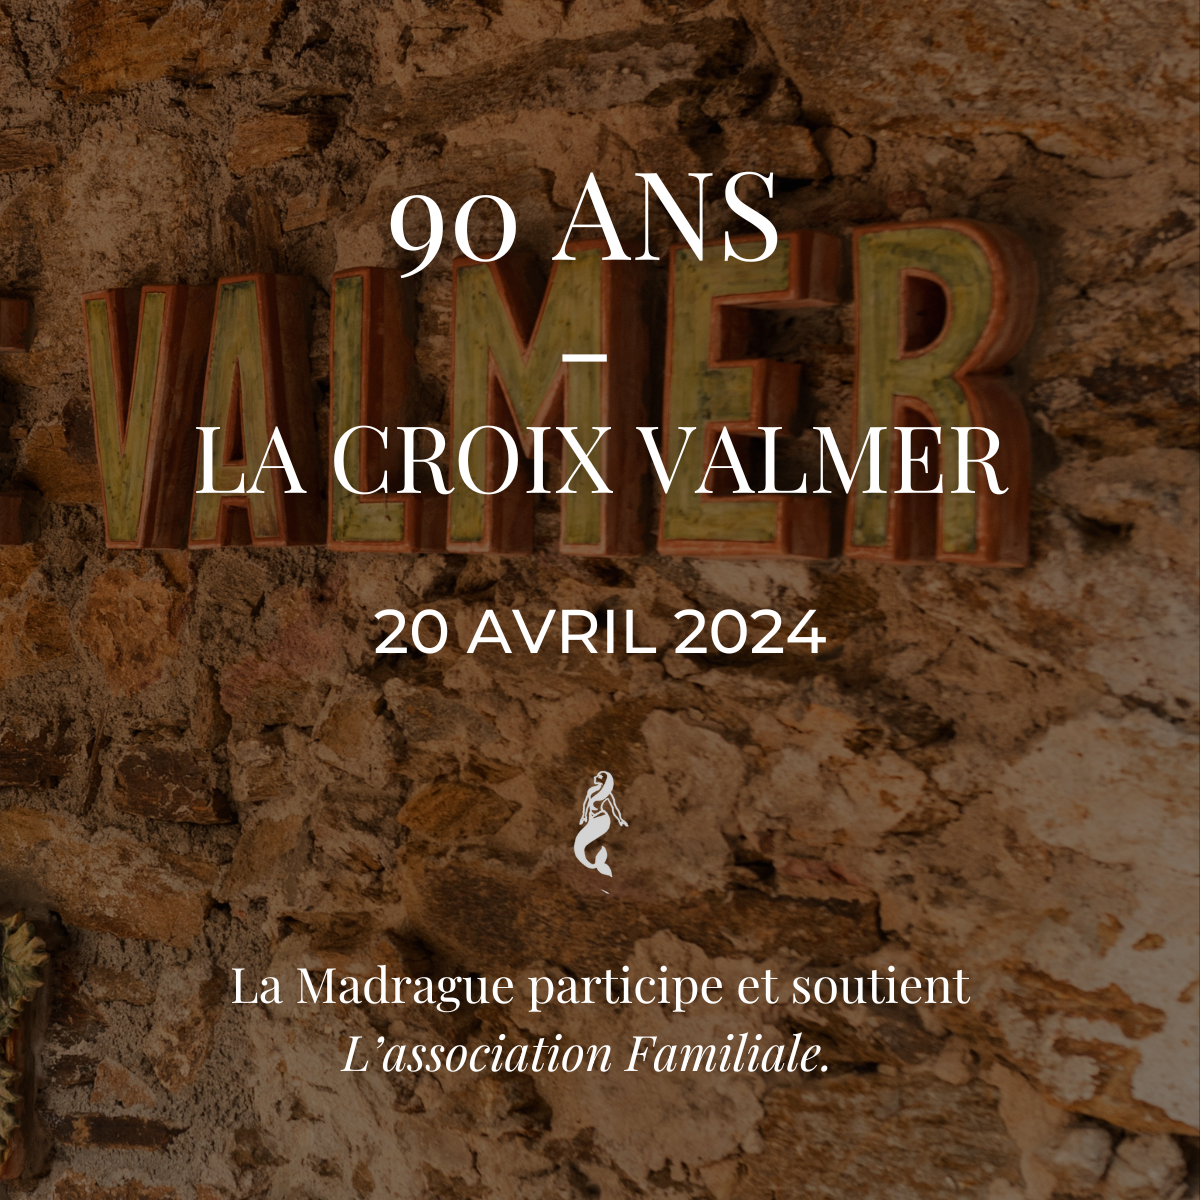 Les Vins de La Madrague célèbrent les 90 ans de La Croix Valmer